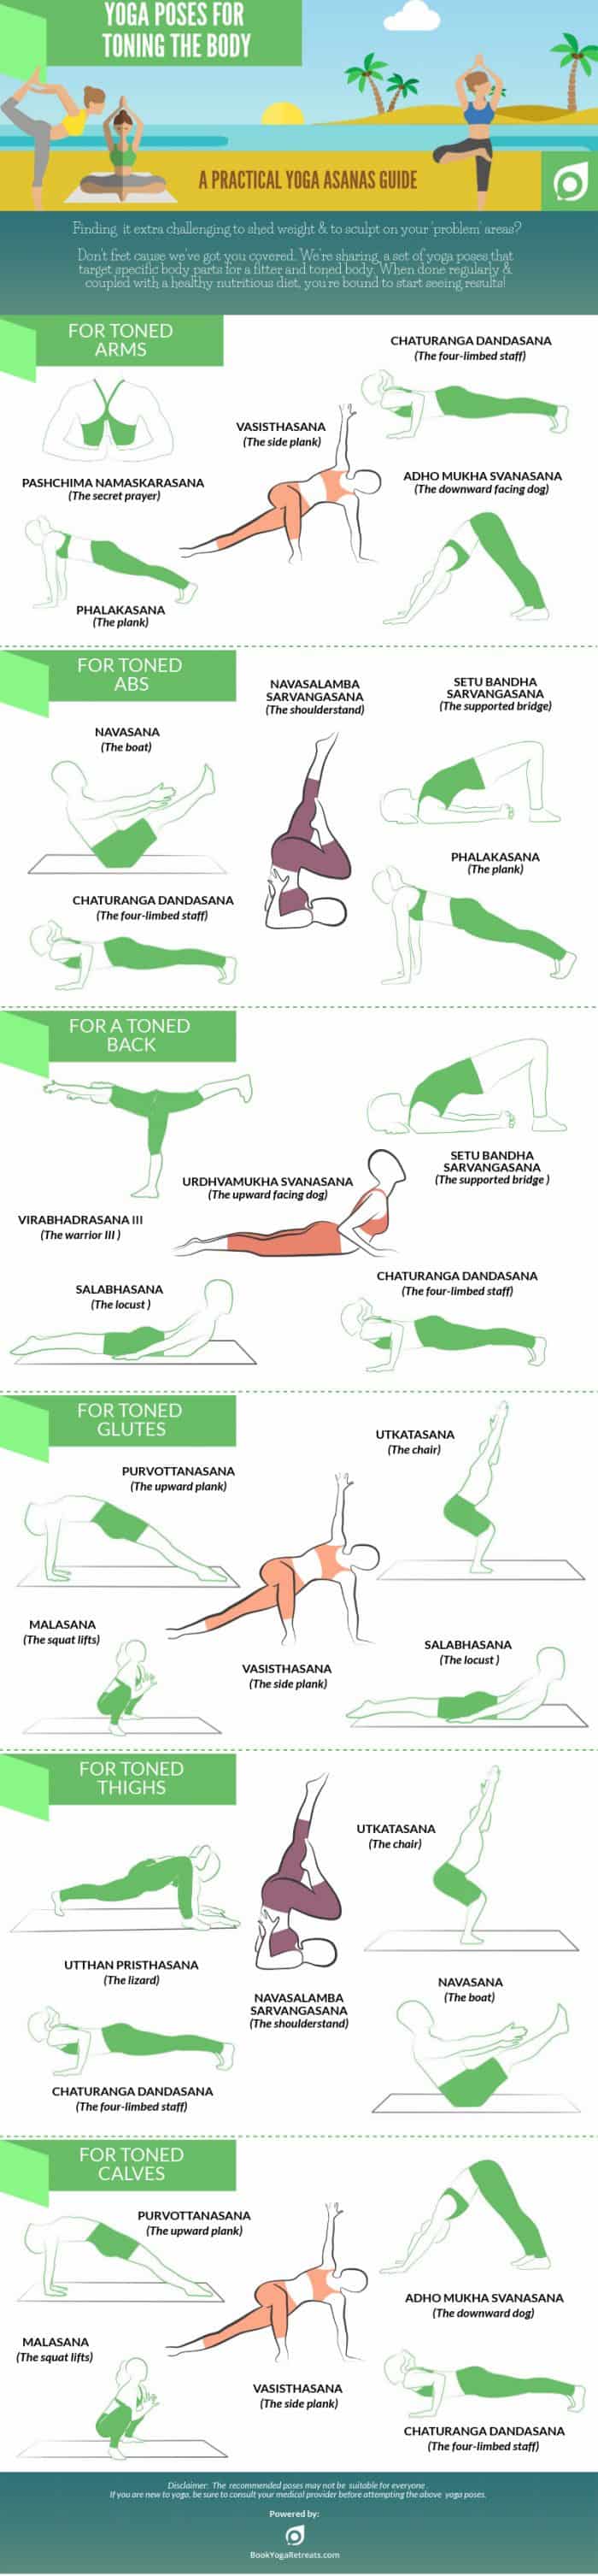 yoga poses cheat sheet infographic